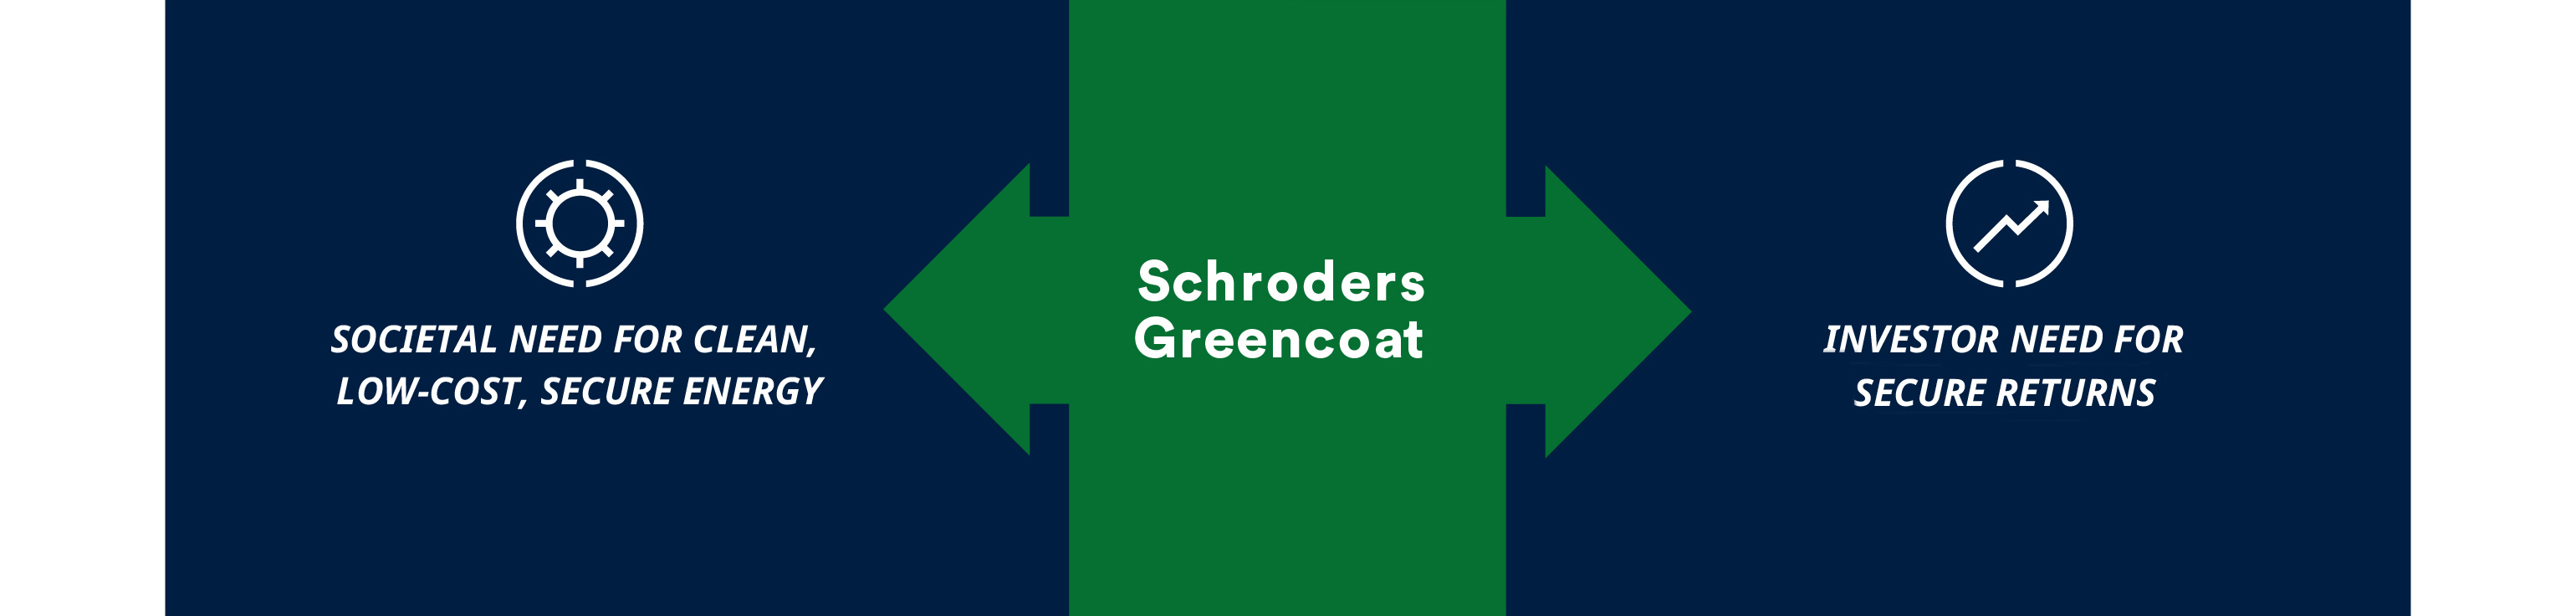 Greencoat infographic - website v2